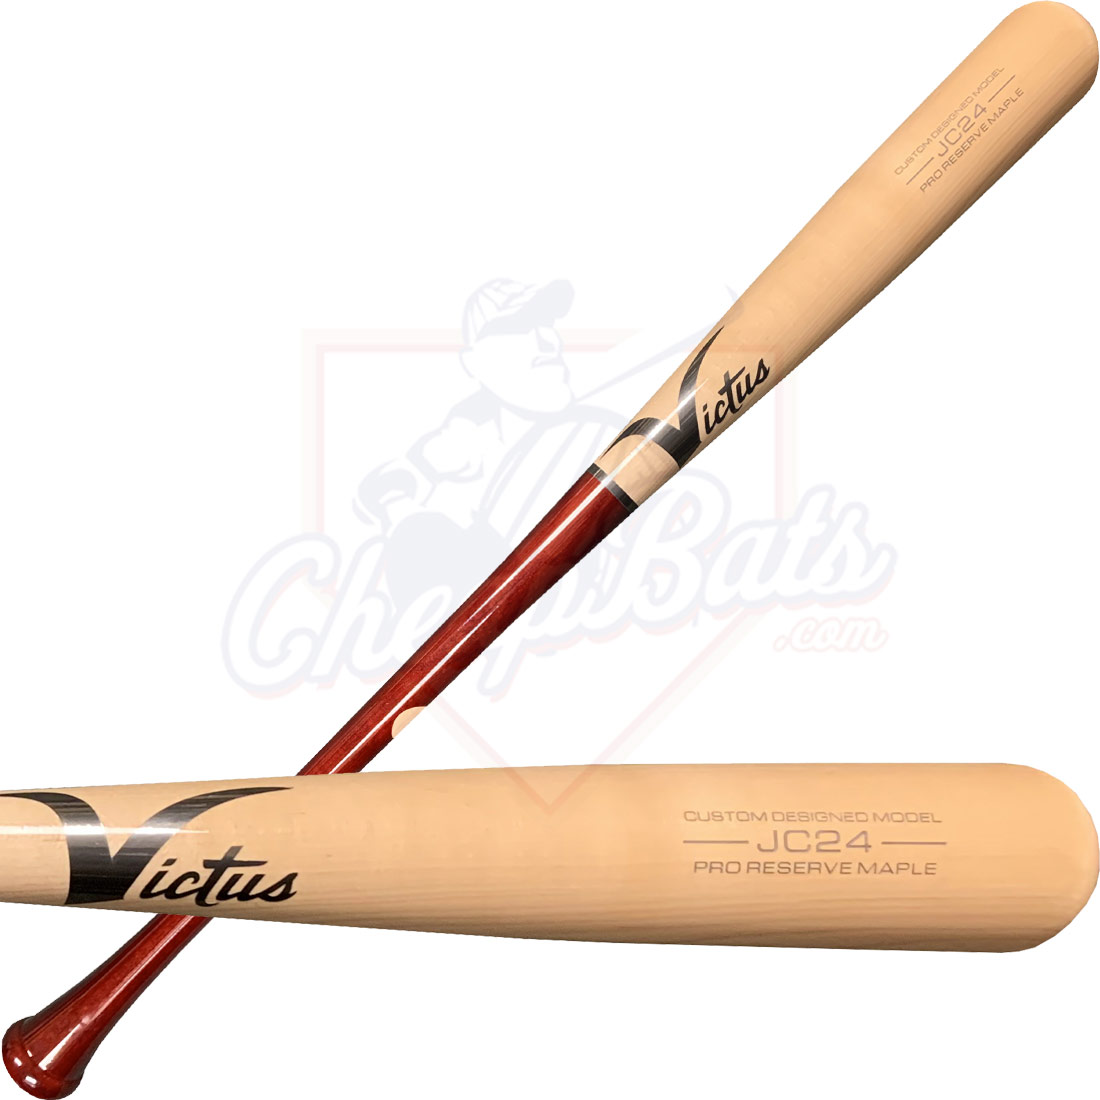 Victus JC24 Pro Reserve Maple Wood Baseball Bat VRWMJC24-DC